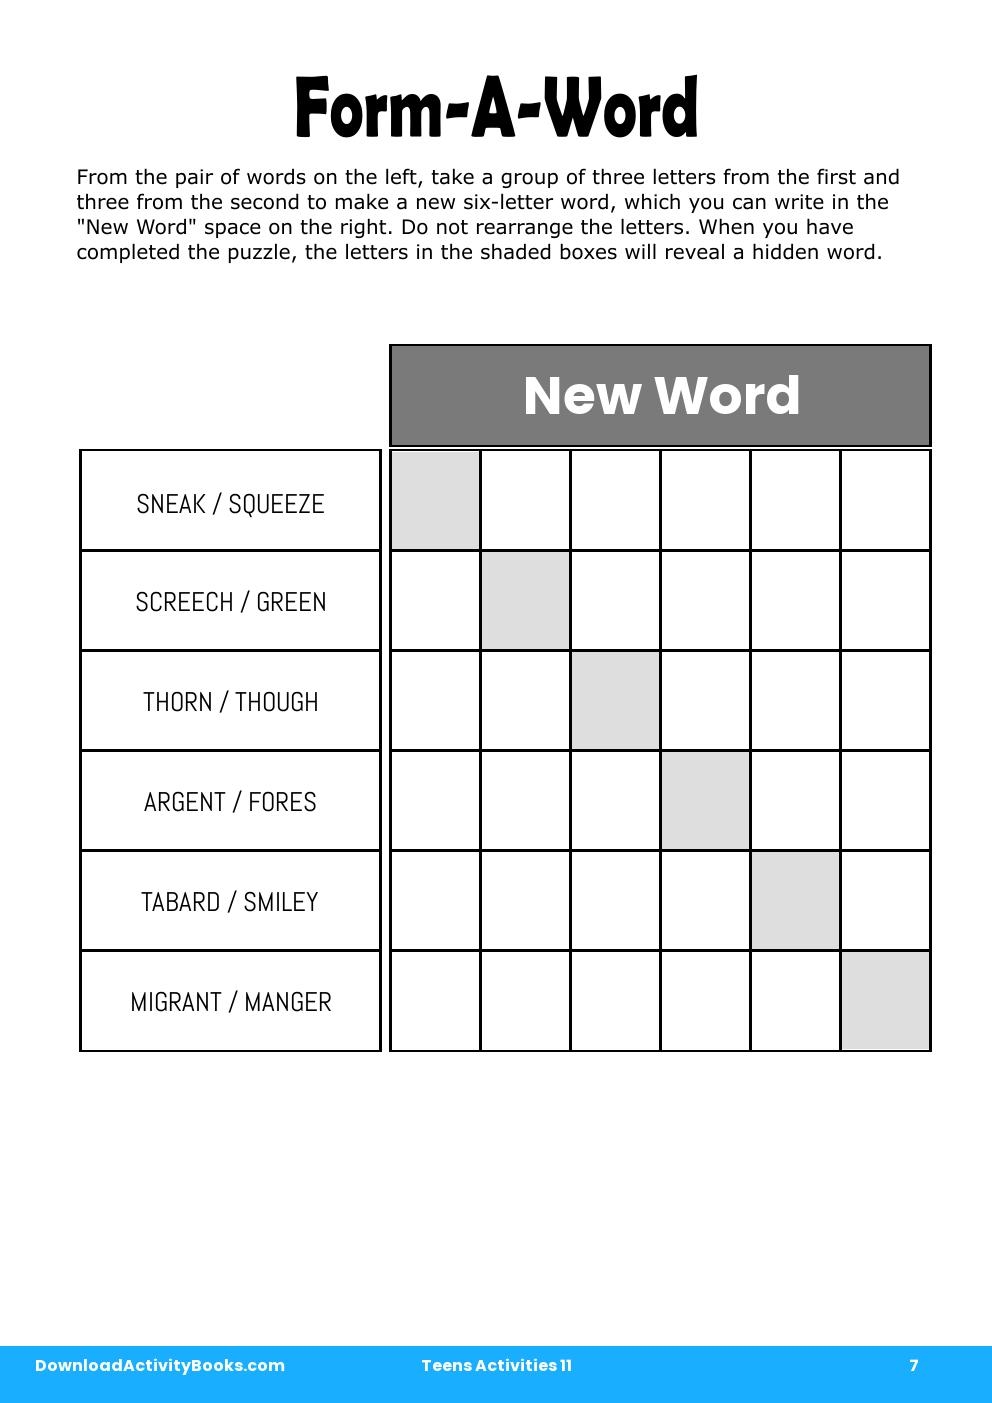 Form-A-Word in Teens Activities 11